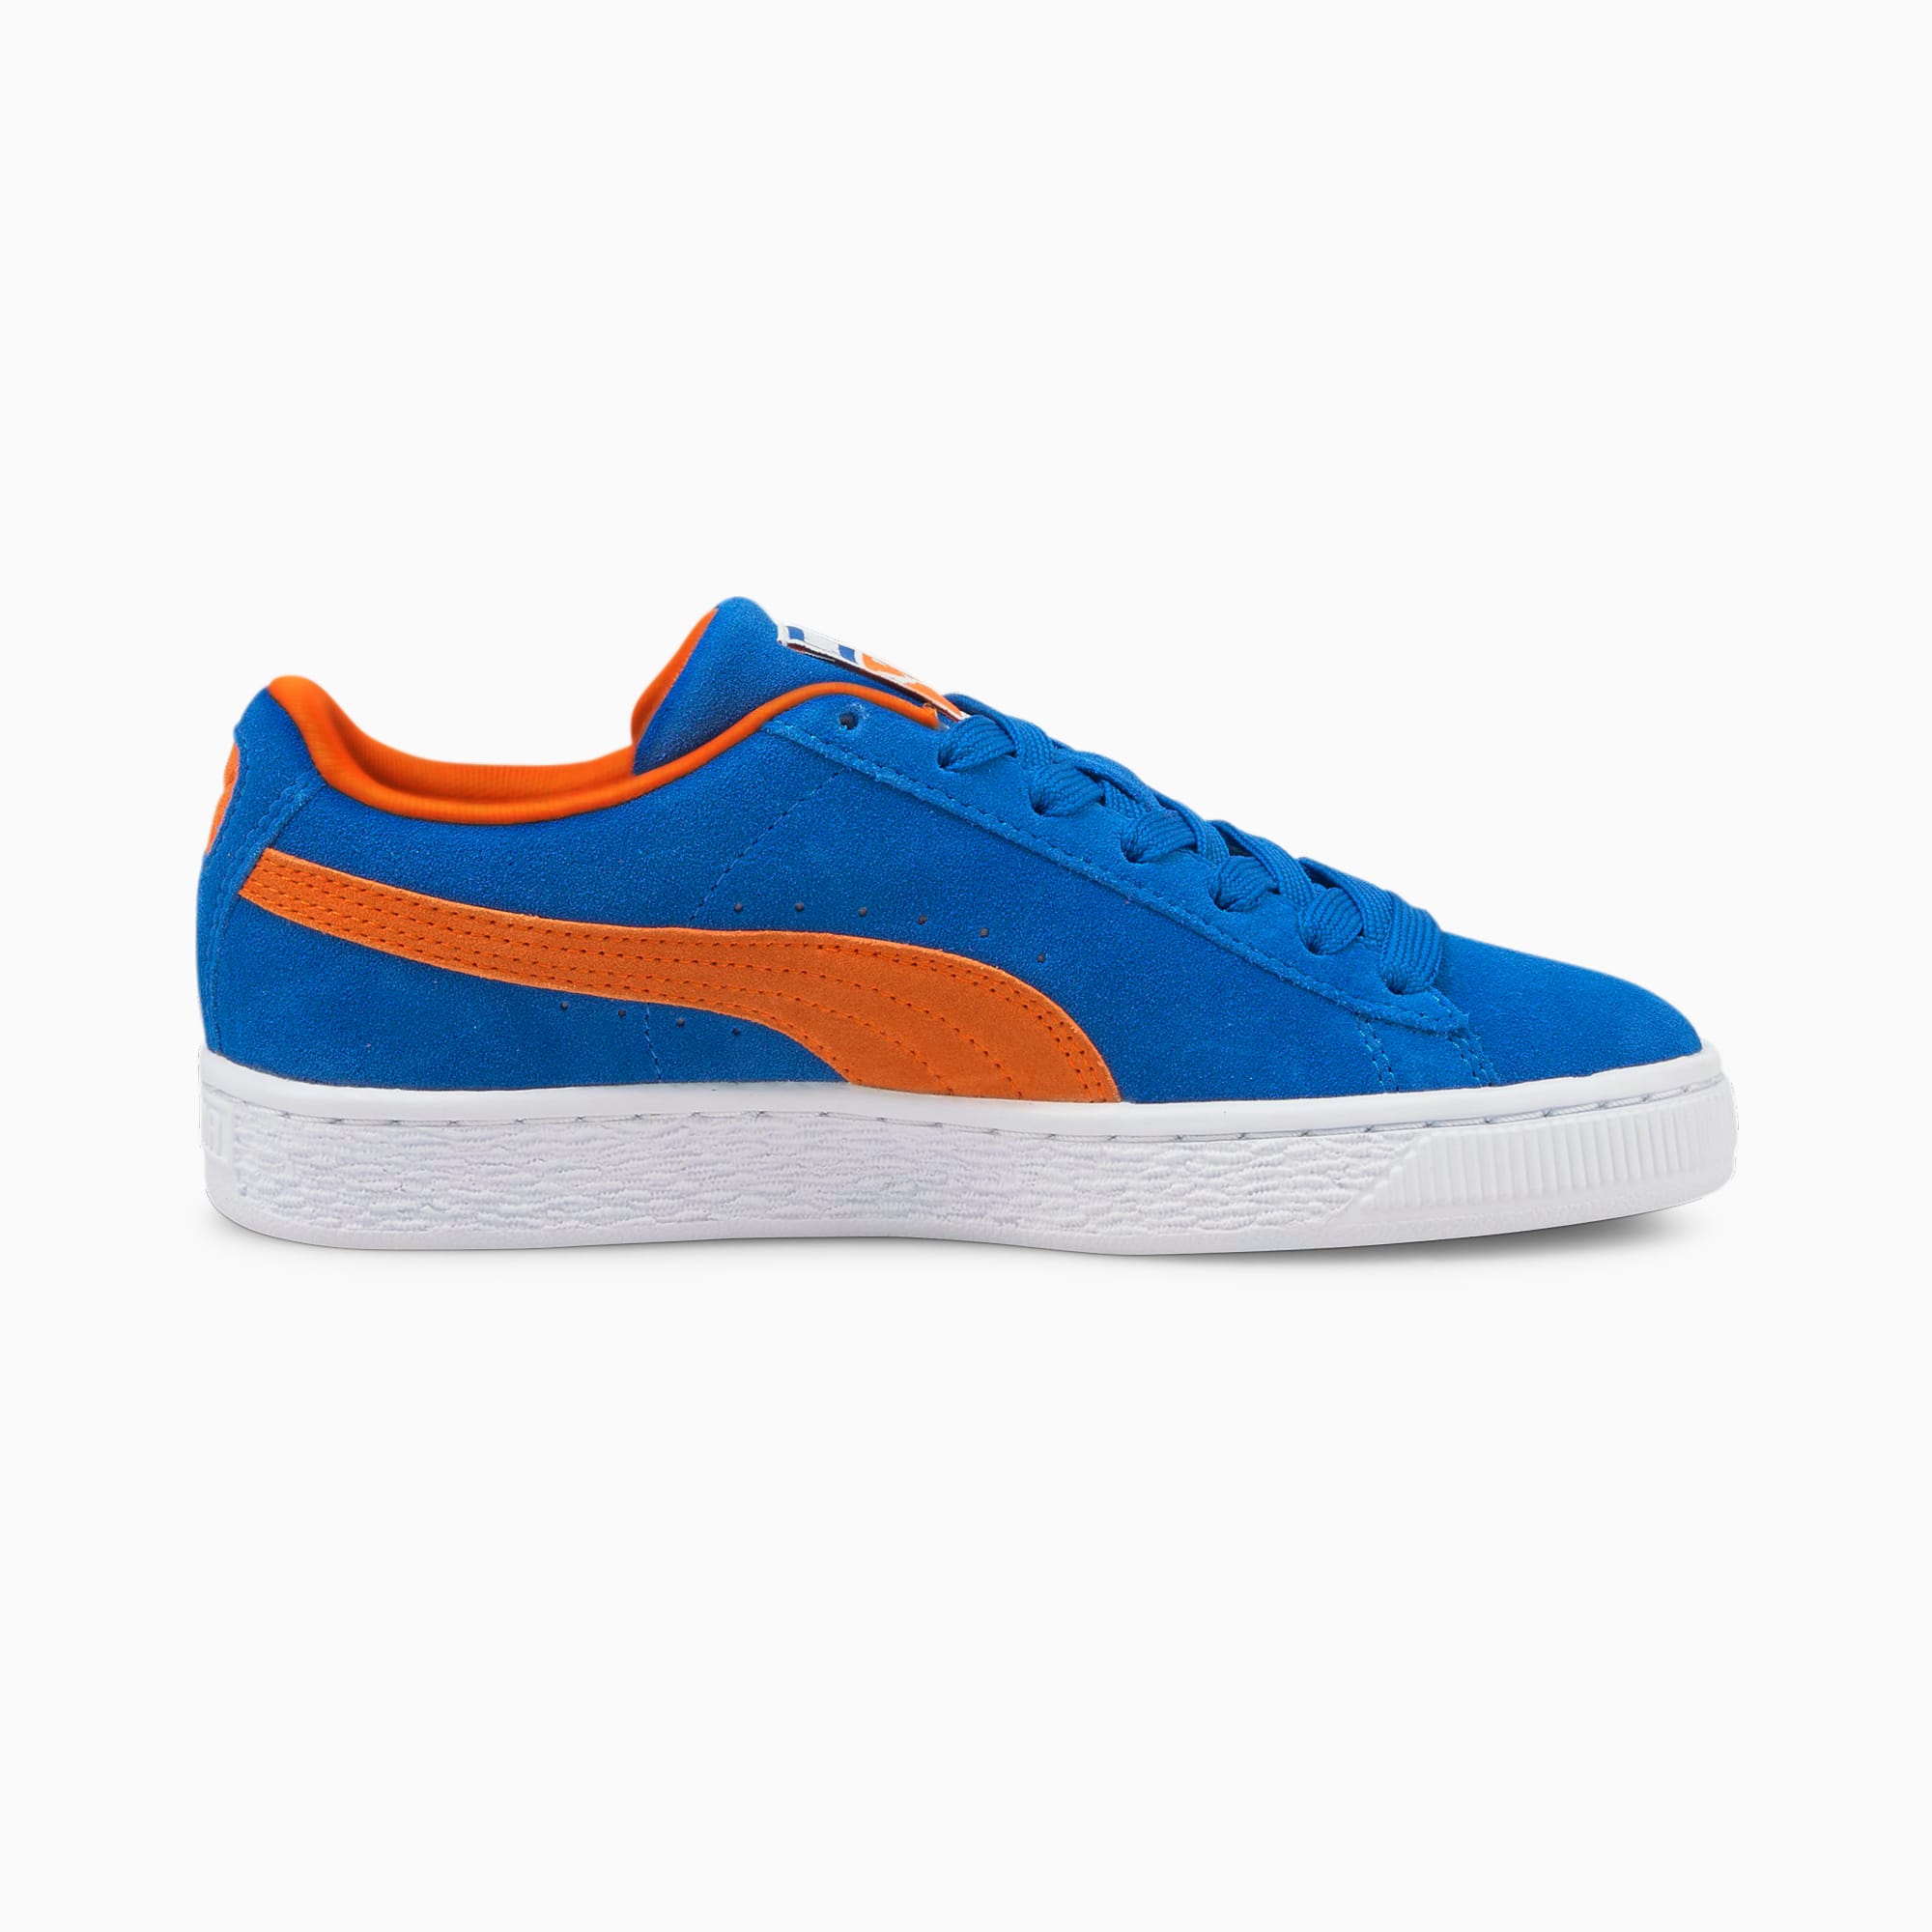 puma orange and blue shoes OFF 75%